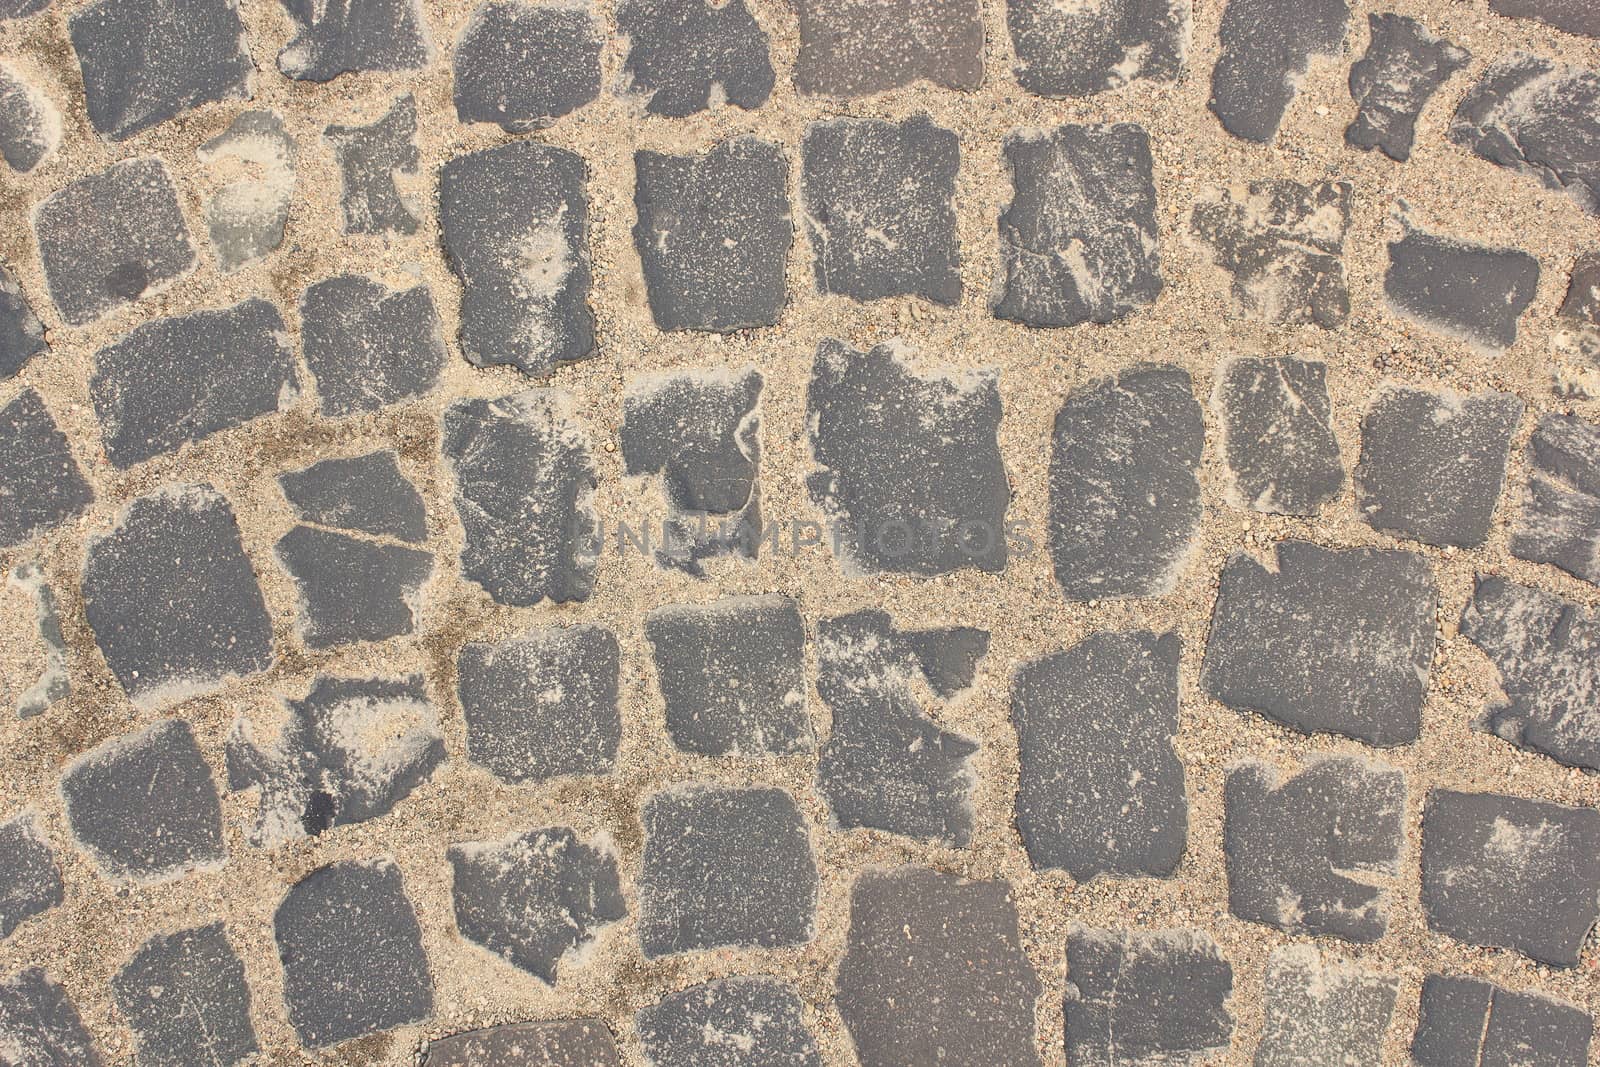 real stone pavement texture on urban pedestrian path